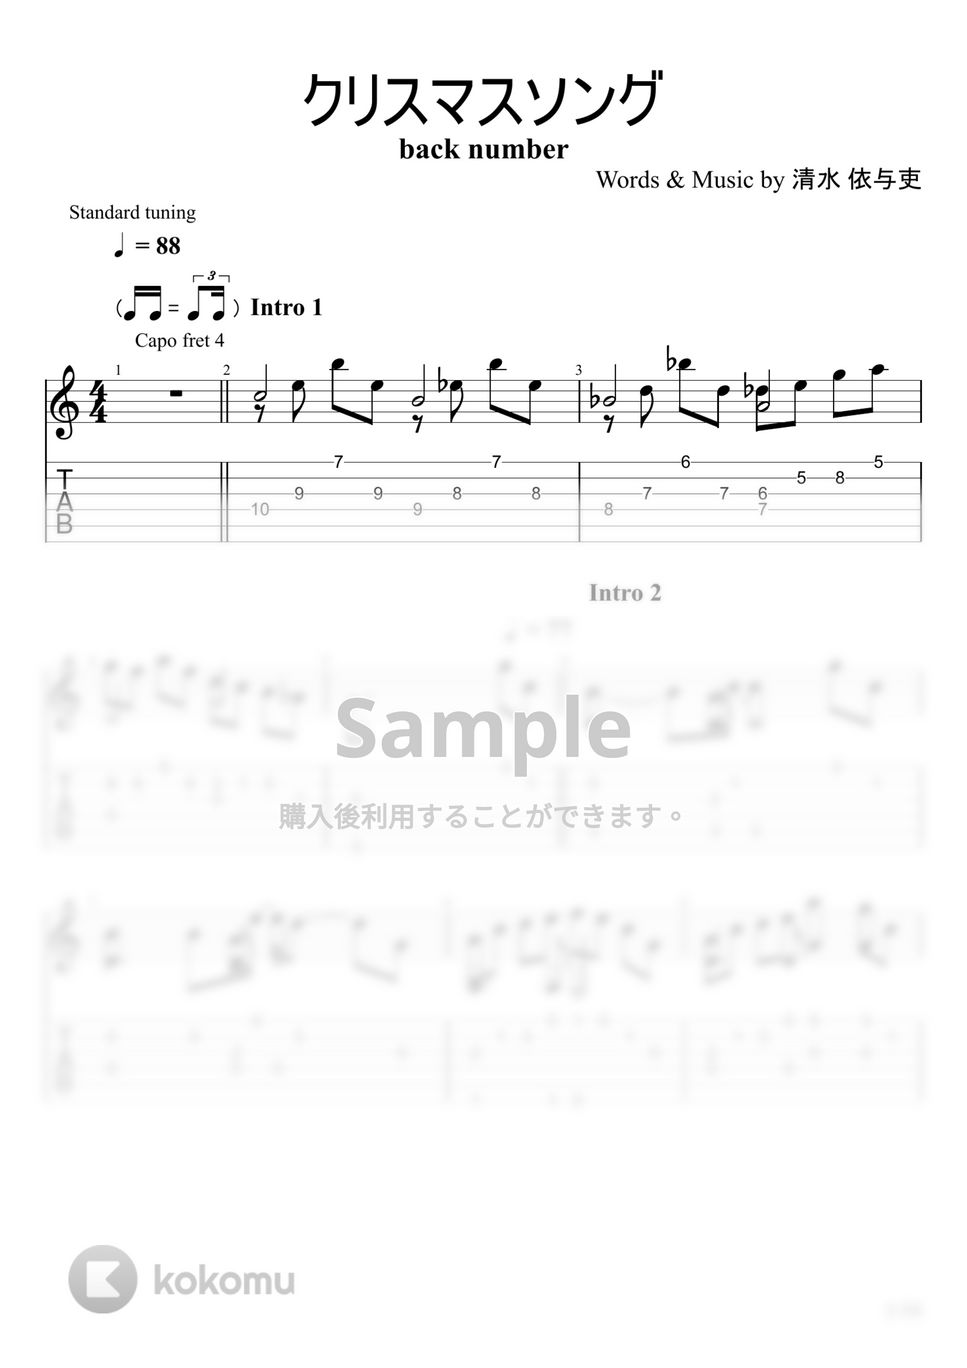 back number - クリスマスソング (ソロギター) by u3danchou